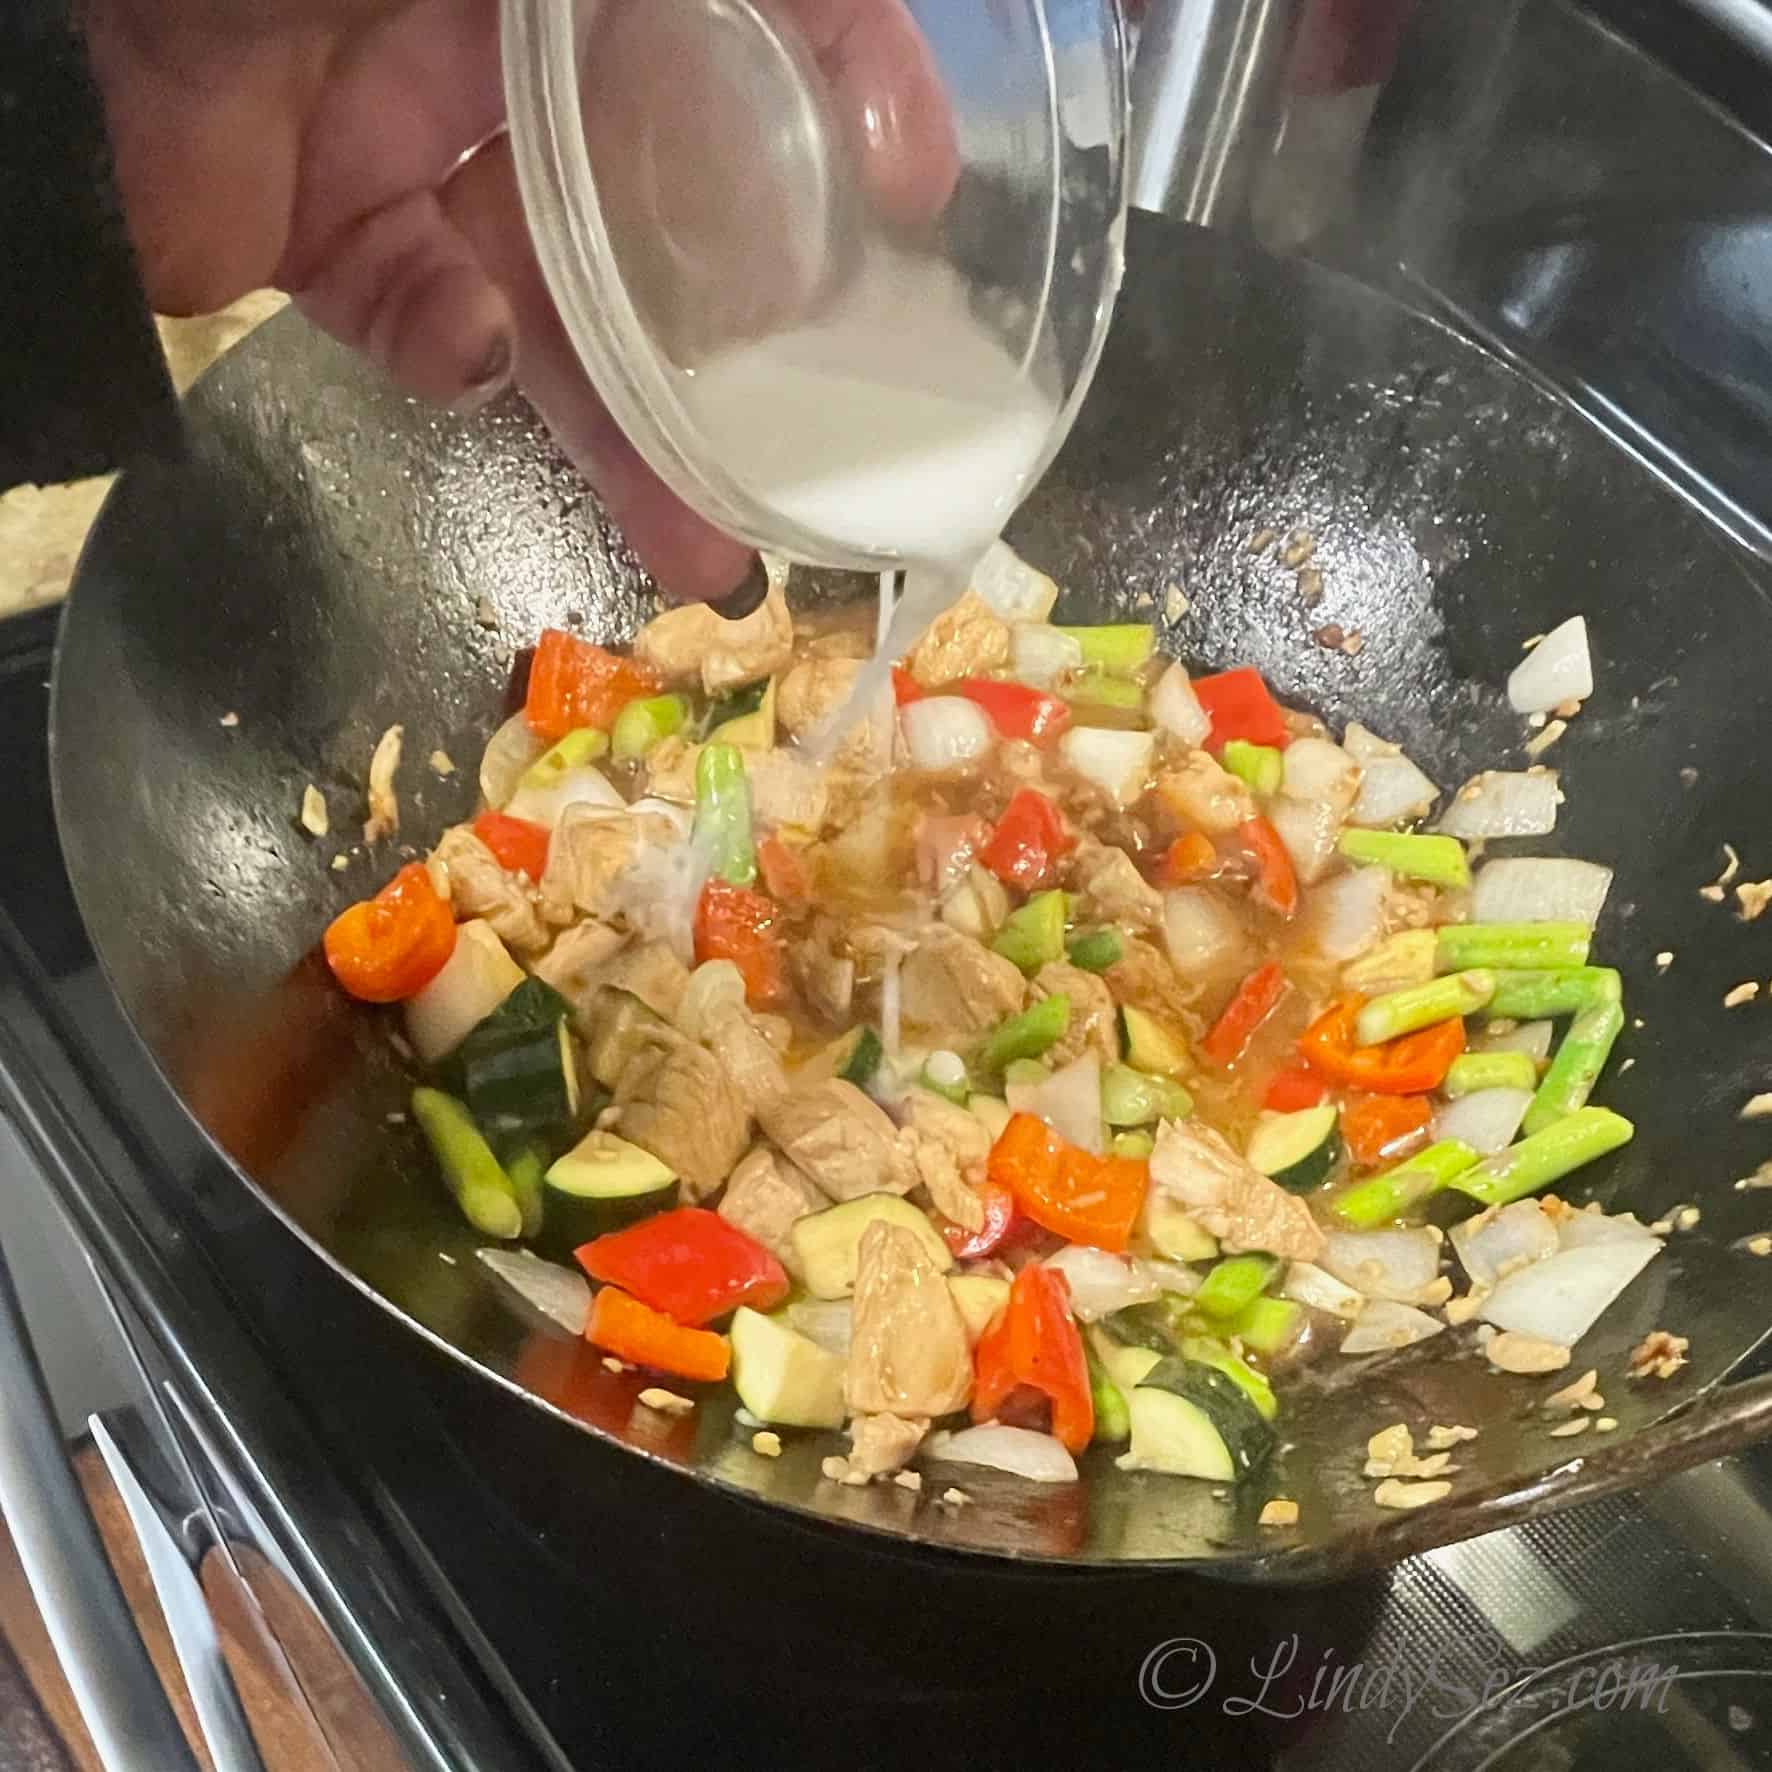 Adding the slurry to the chicken asparagus stir-fry 